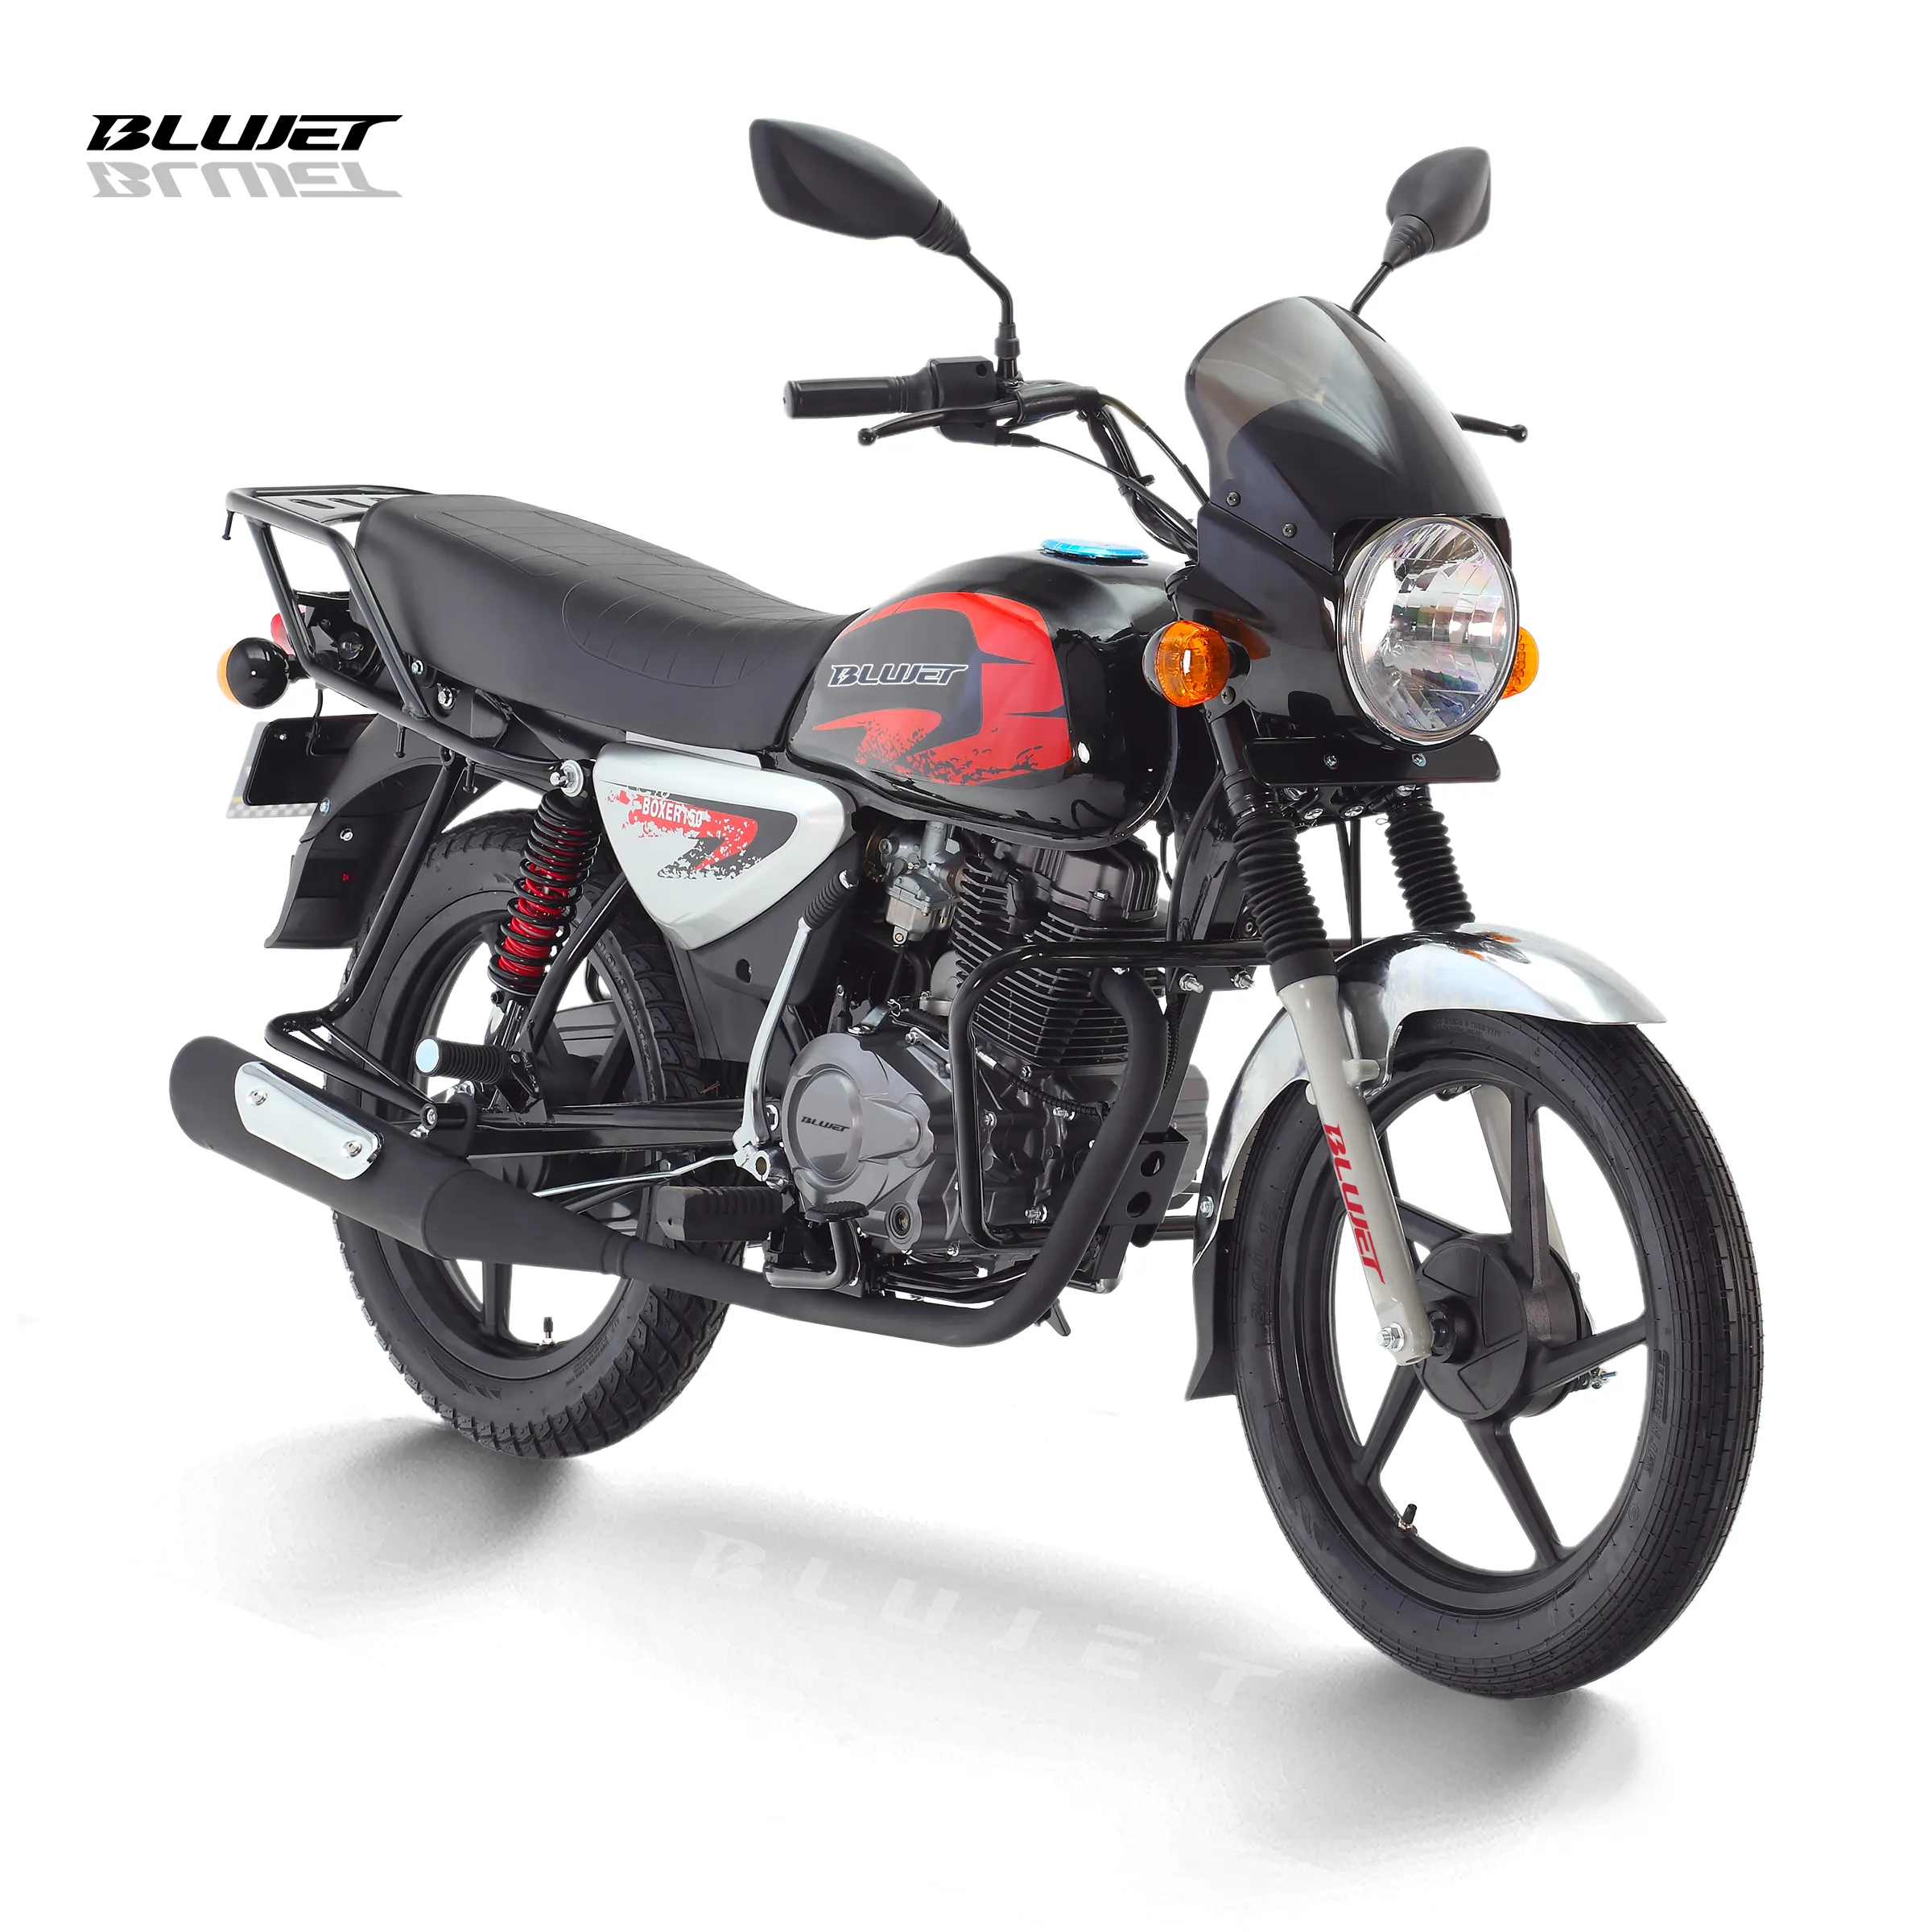 New gas powered 125cc 120cc 150cc legal street motorcycle bajaj Boxer 150 x-125 sells well in India Africa Sudan Nigeria BM150